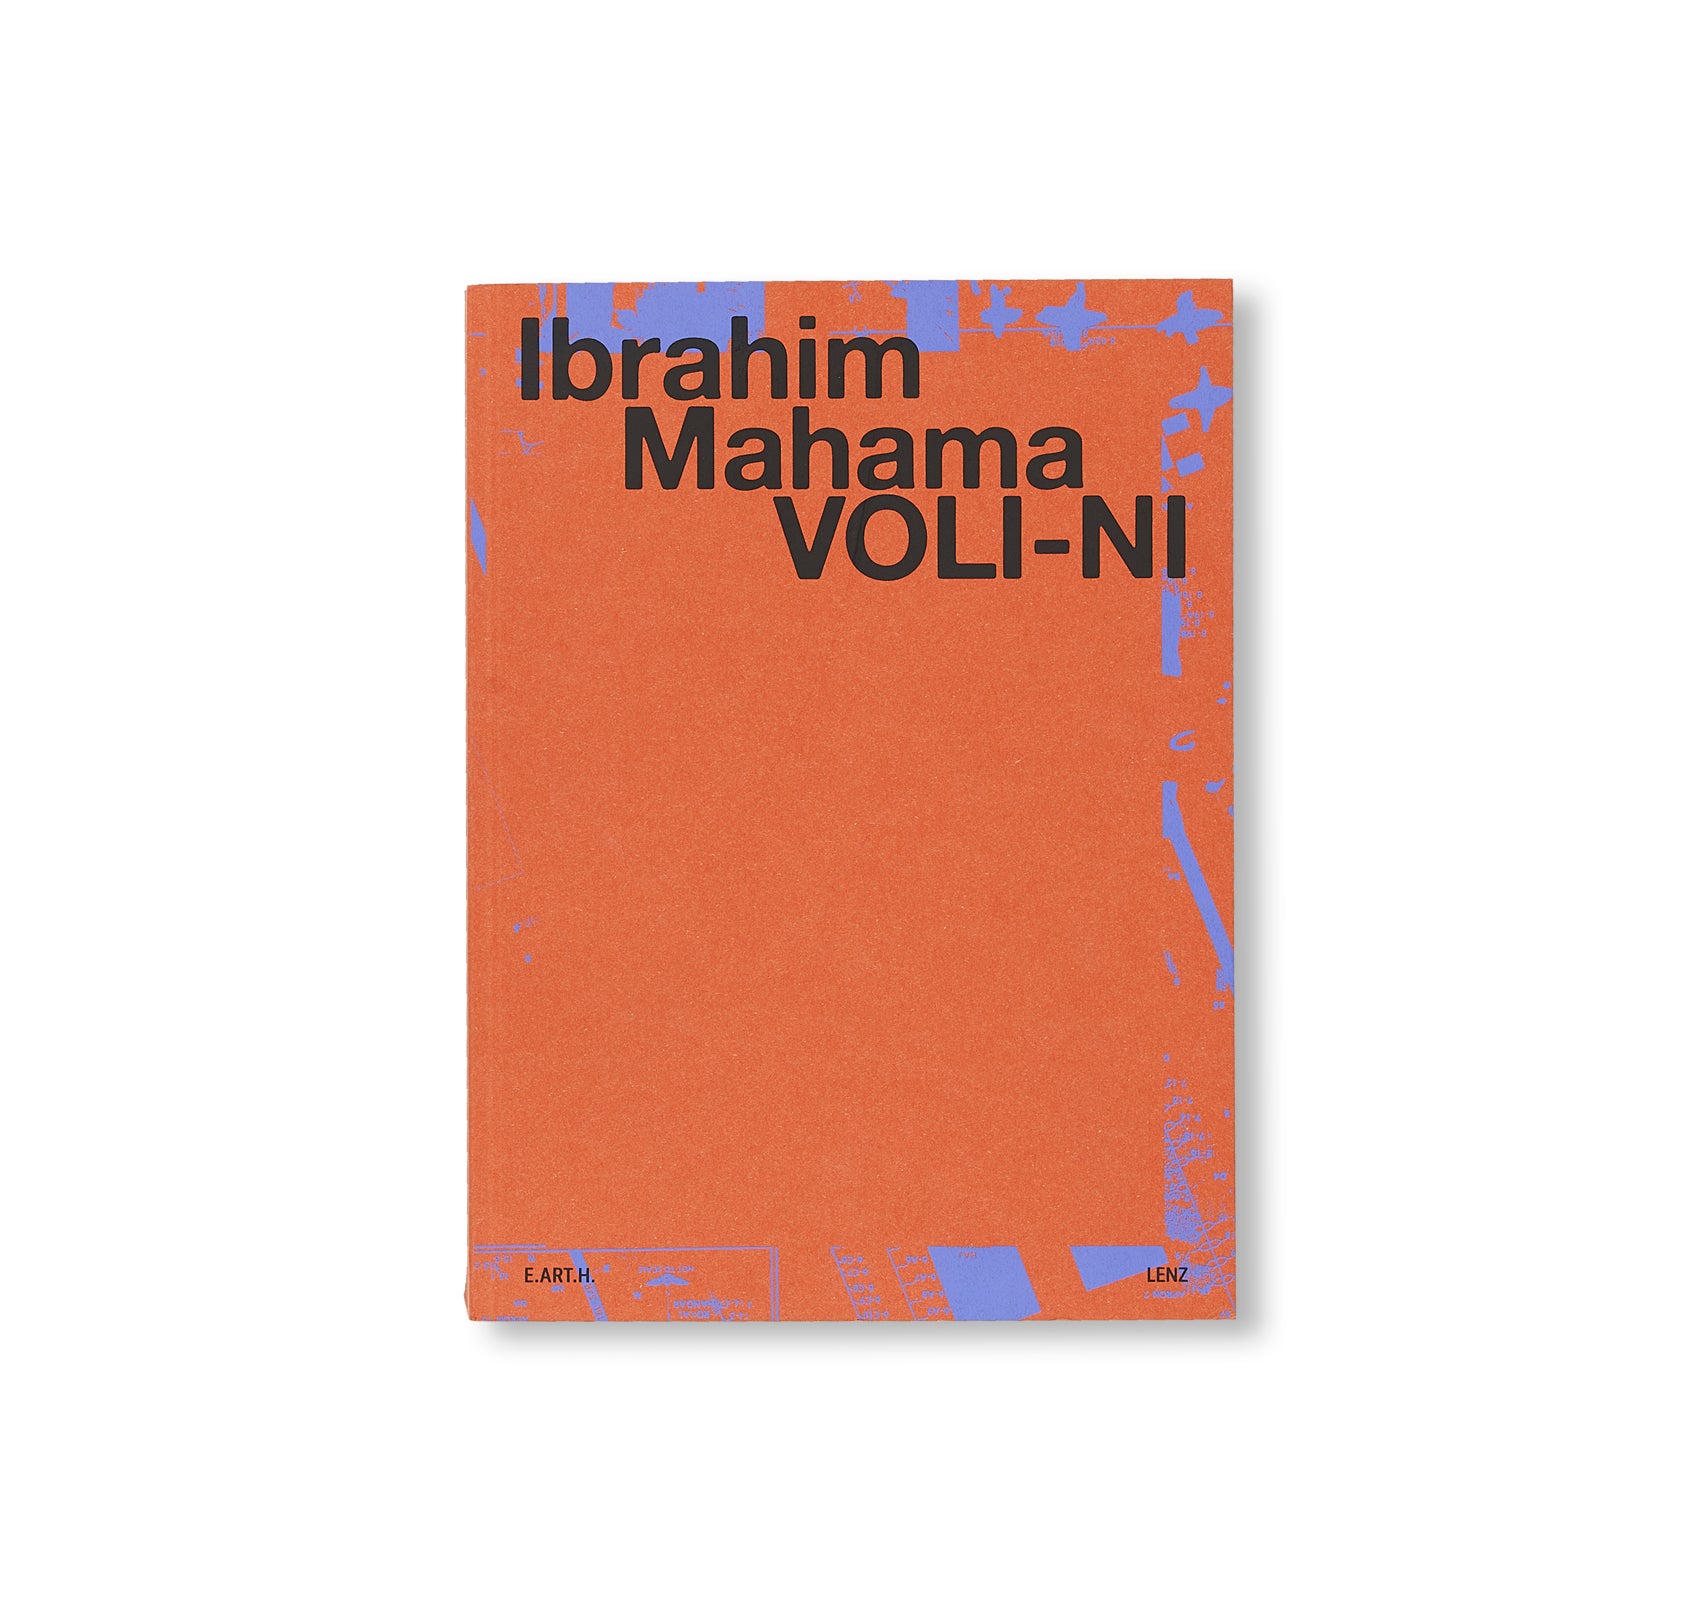 VOLI-NI by Ibrahim Mahama